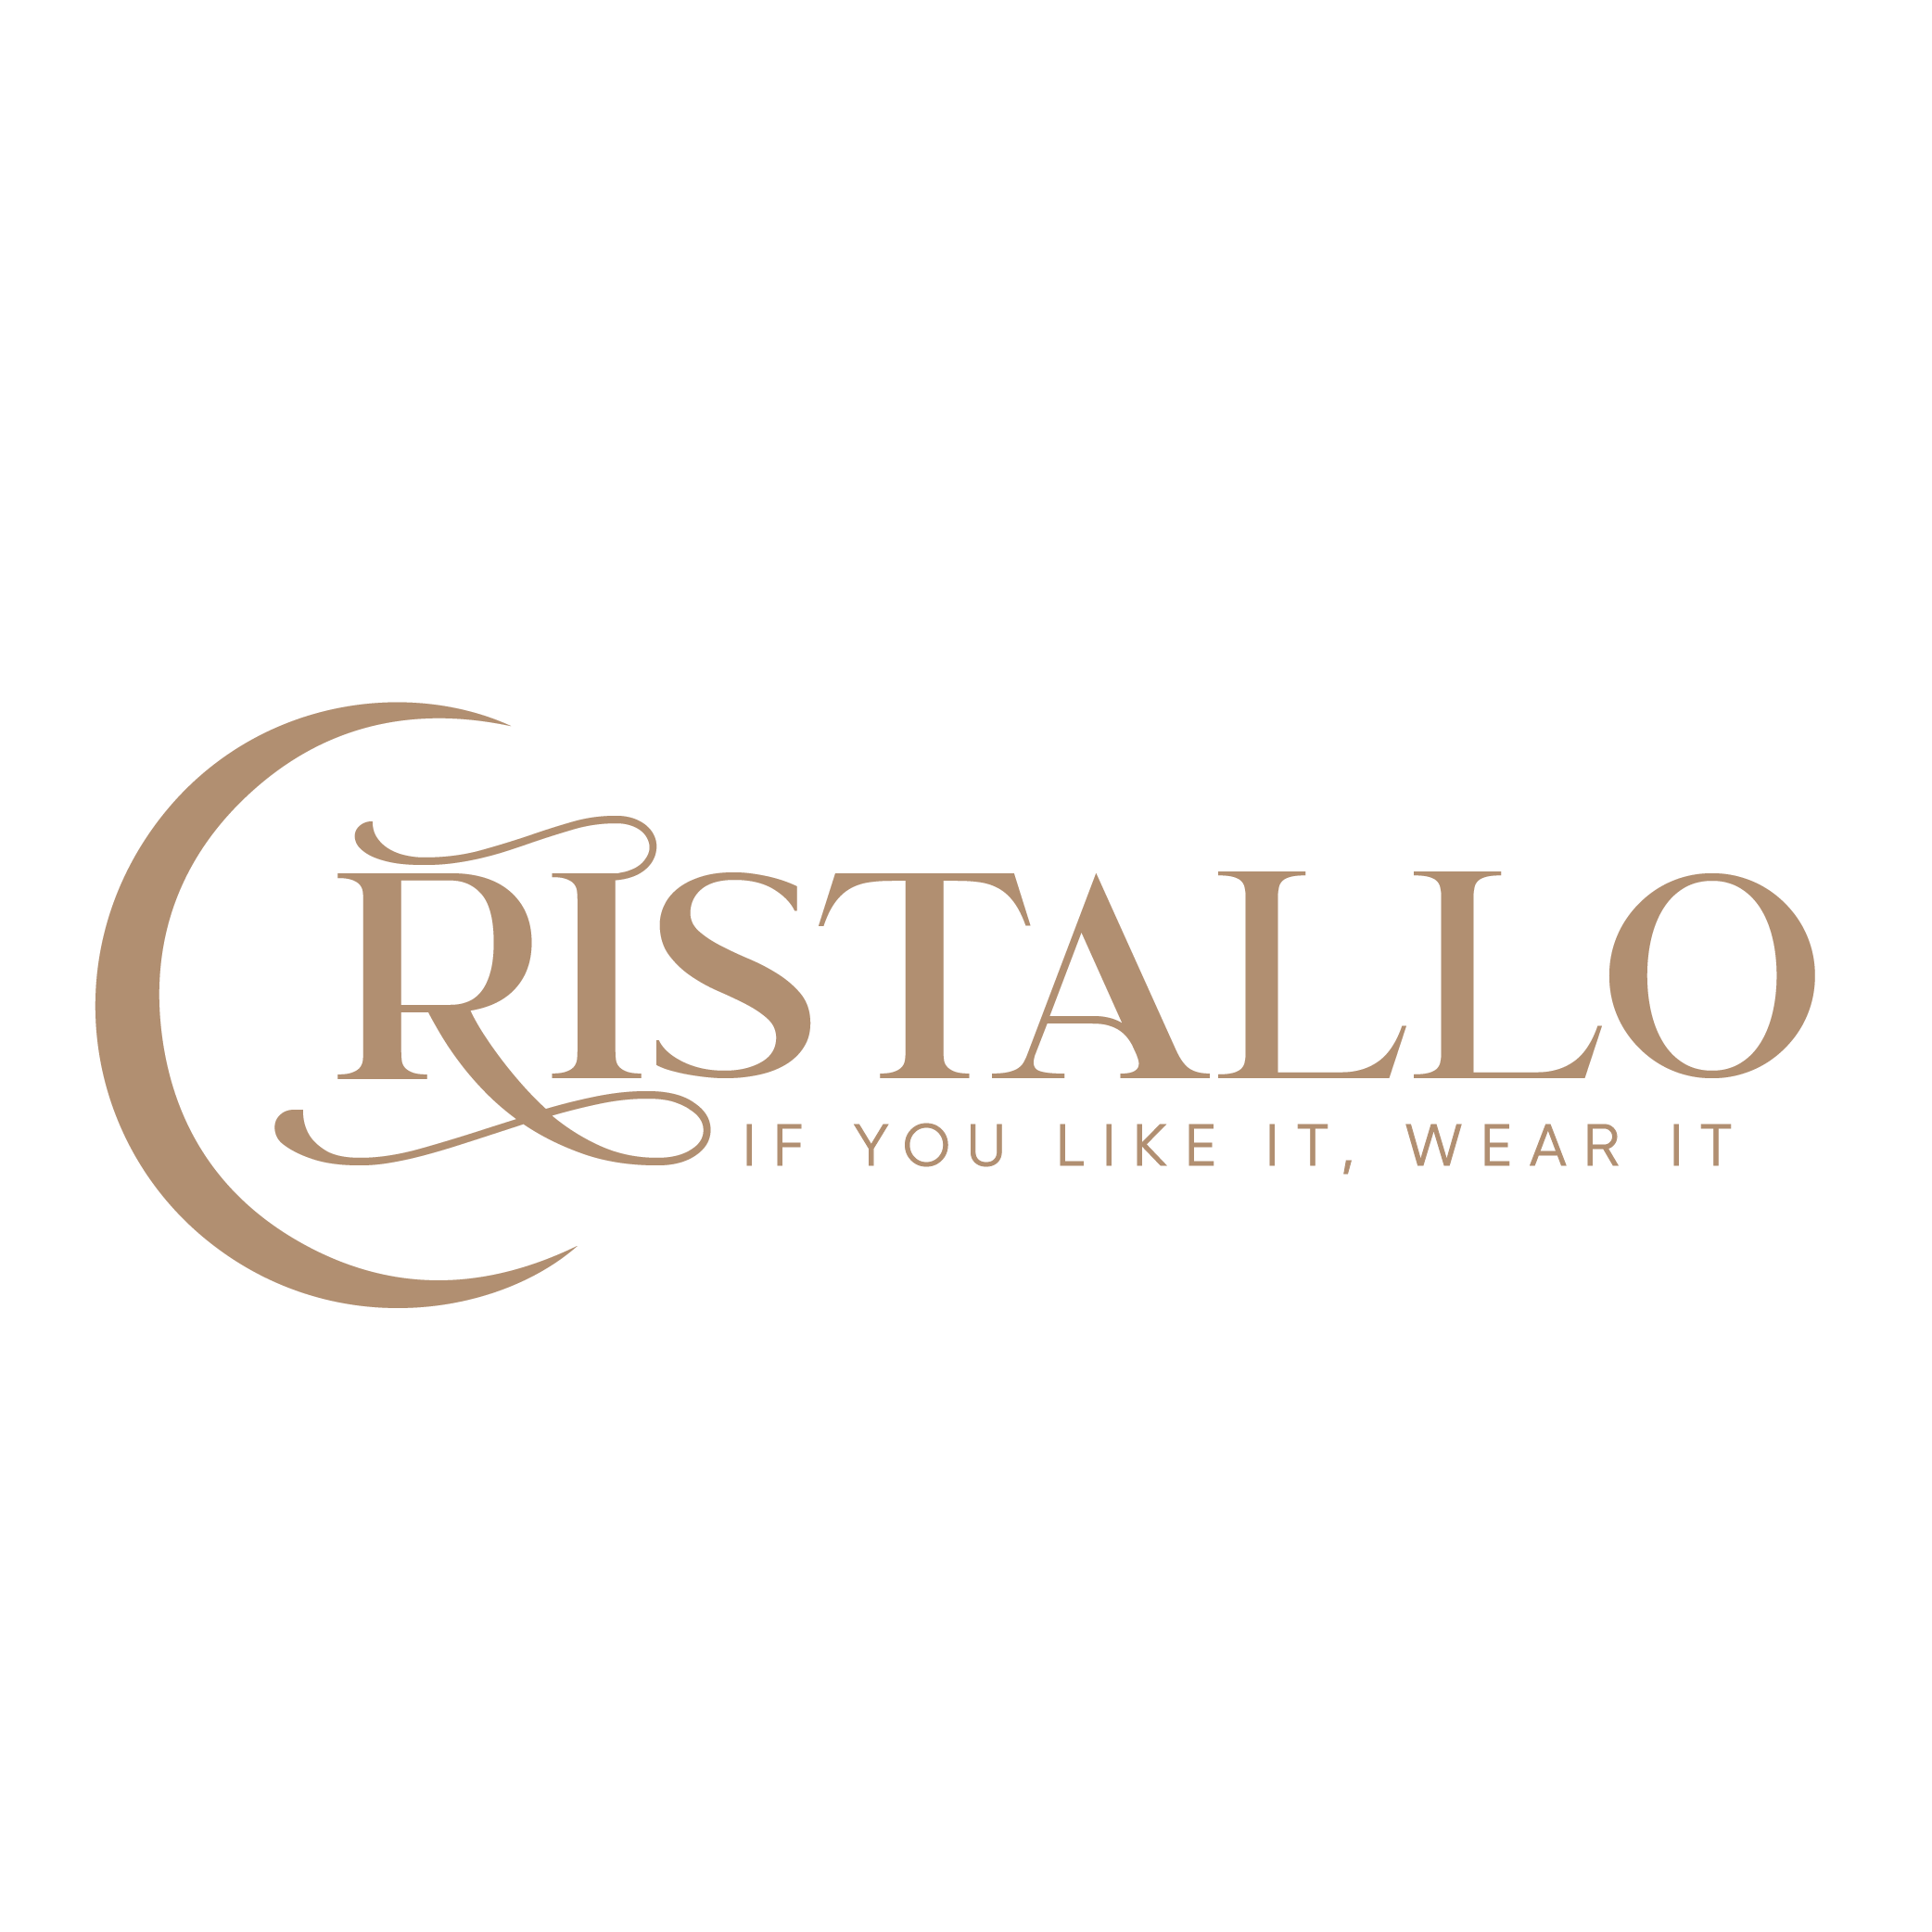 Cristallo's Jewelry